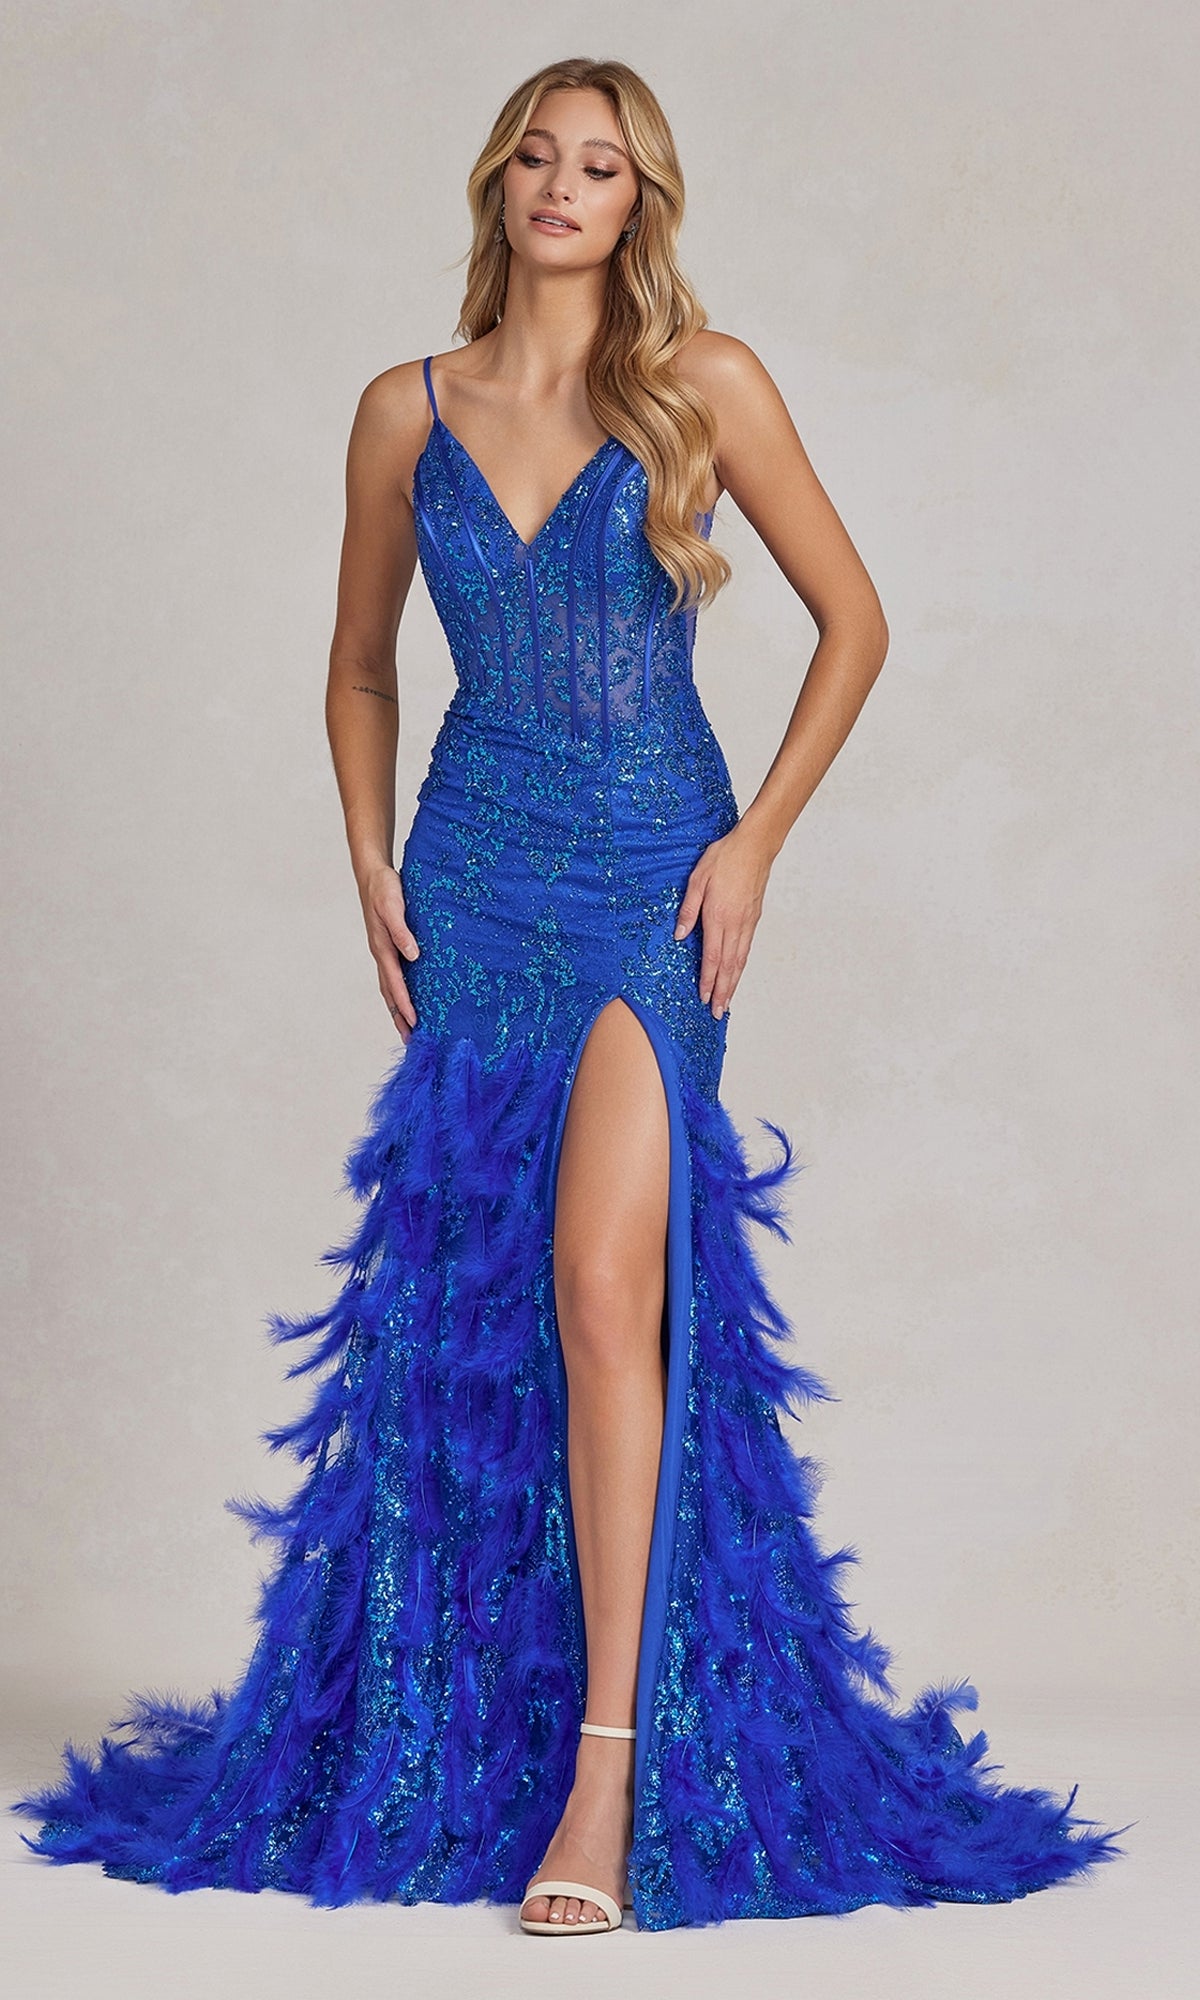 Transparent Evening Prom Gown Birthday Dress Sparkly Rhinestones Feather  Dress | eBay